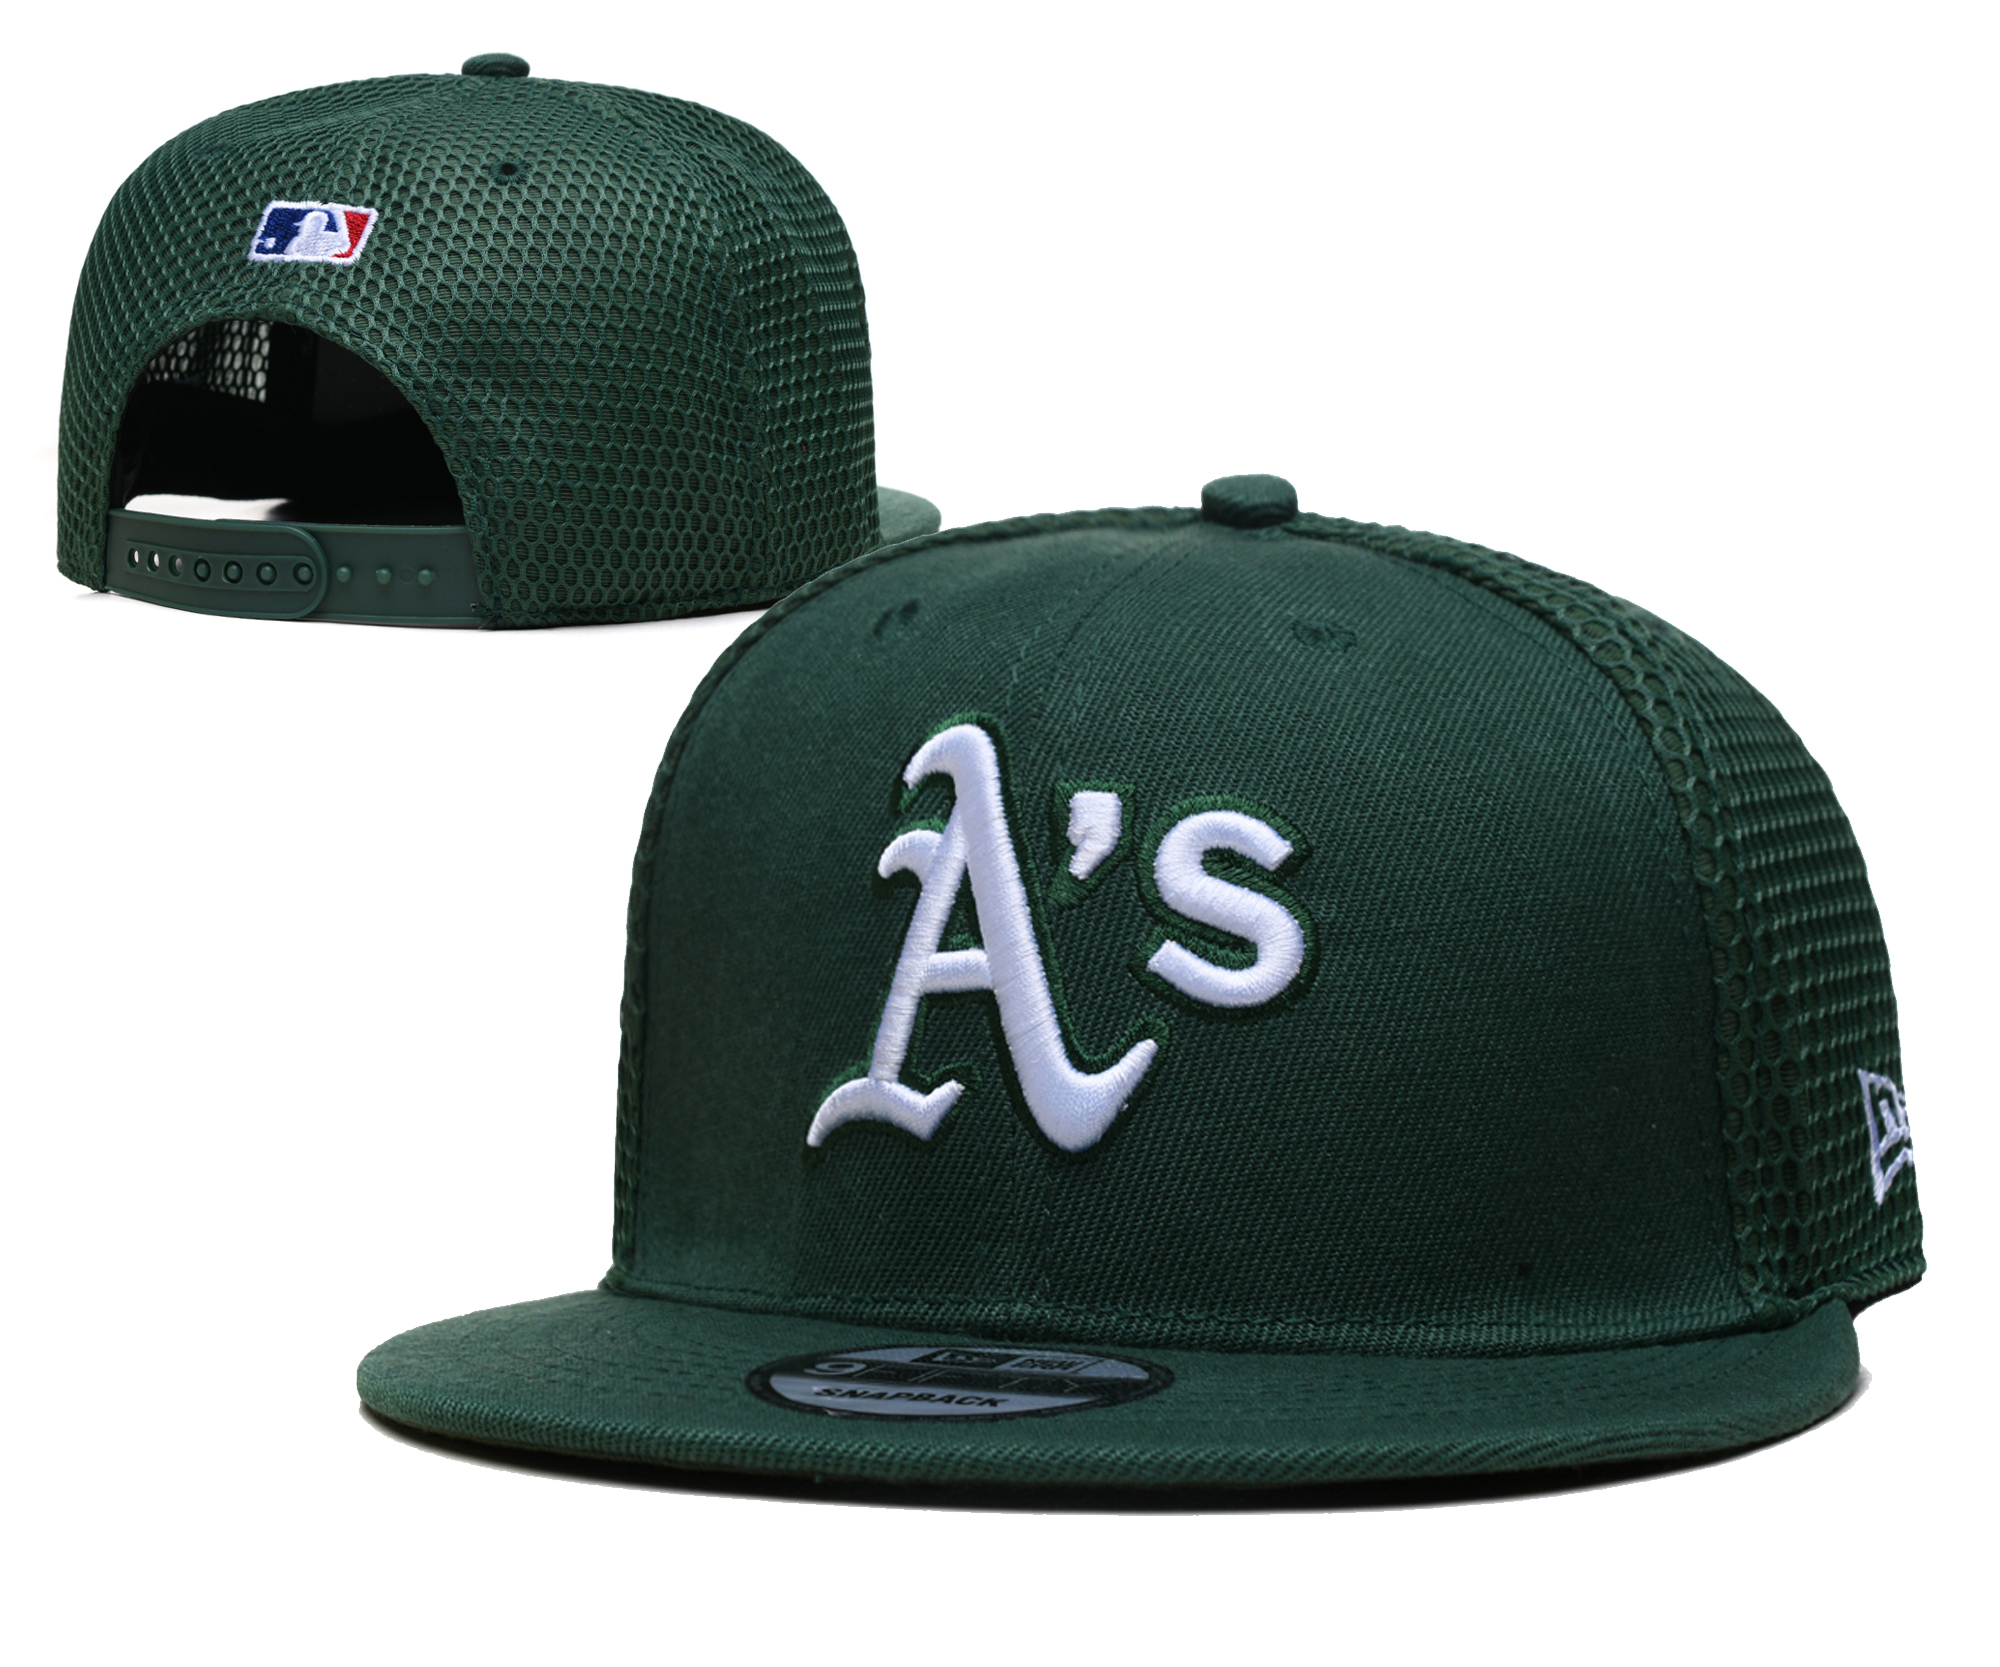 Cheap 2021 MLB Oakland Athletics 31 TX hat